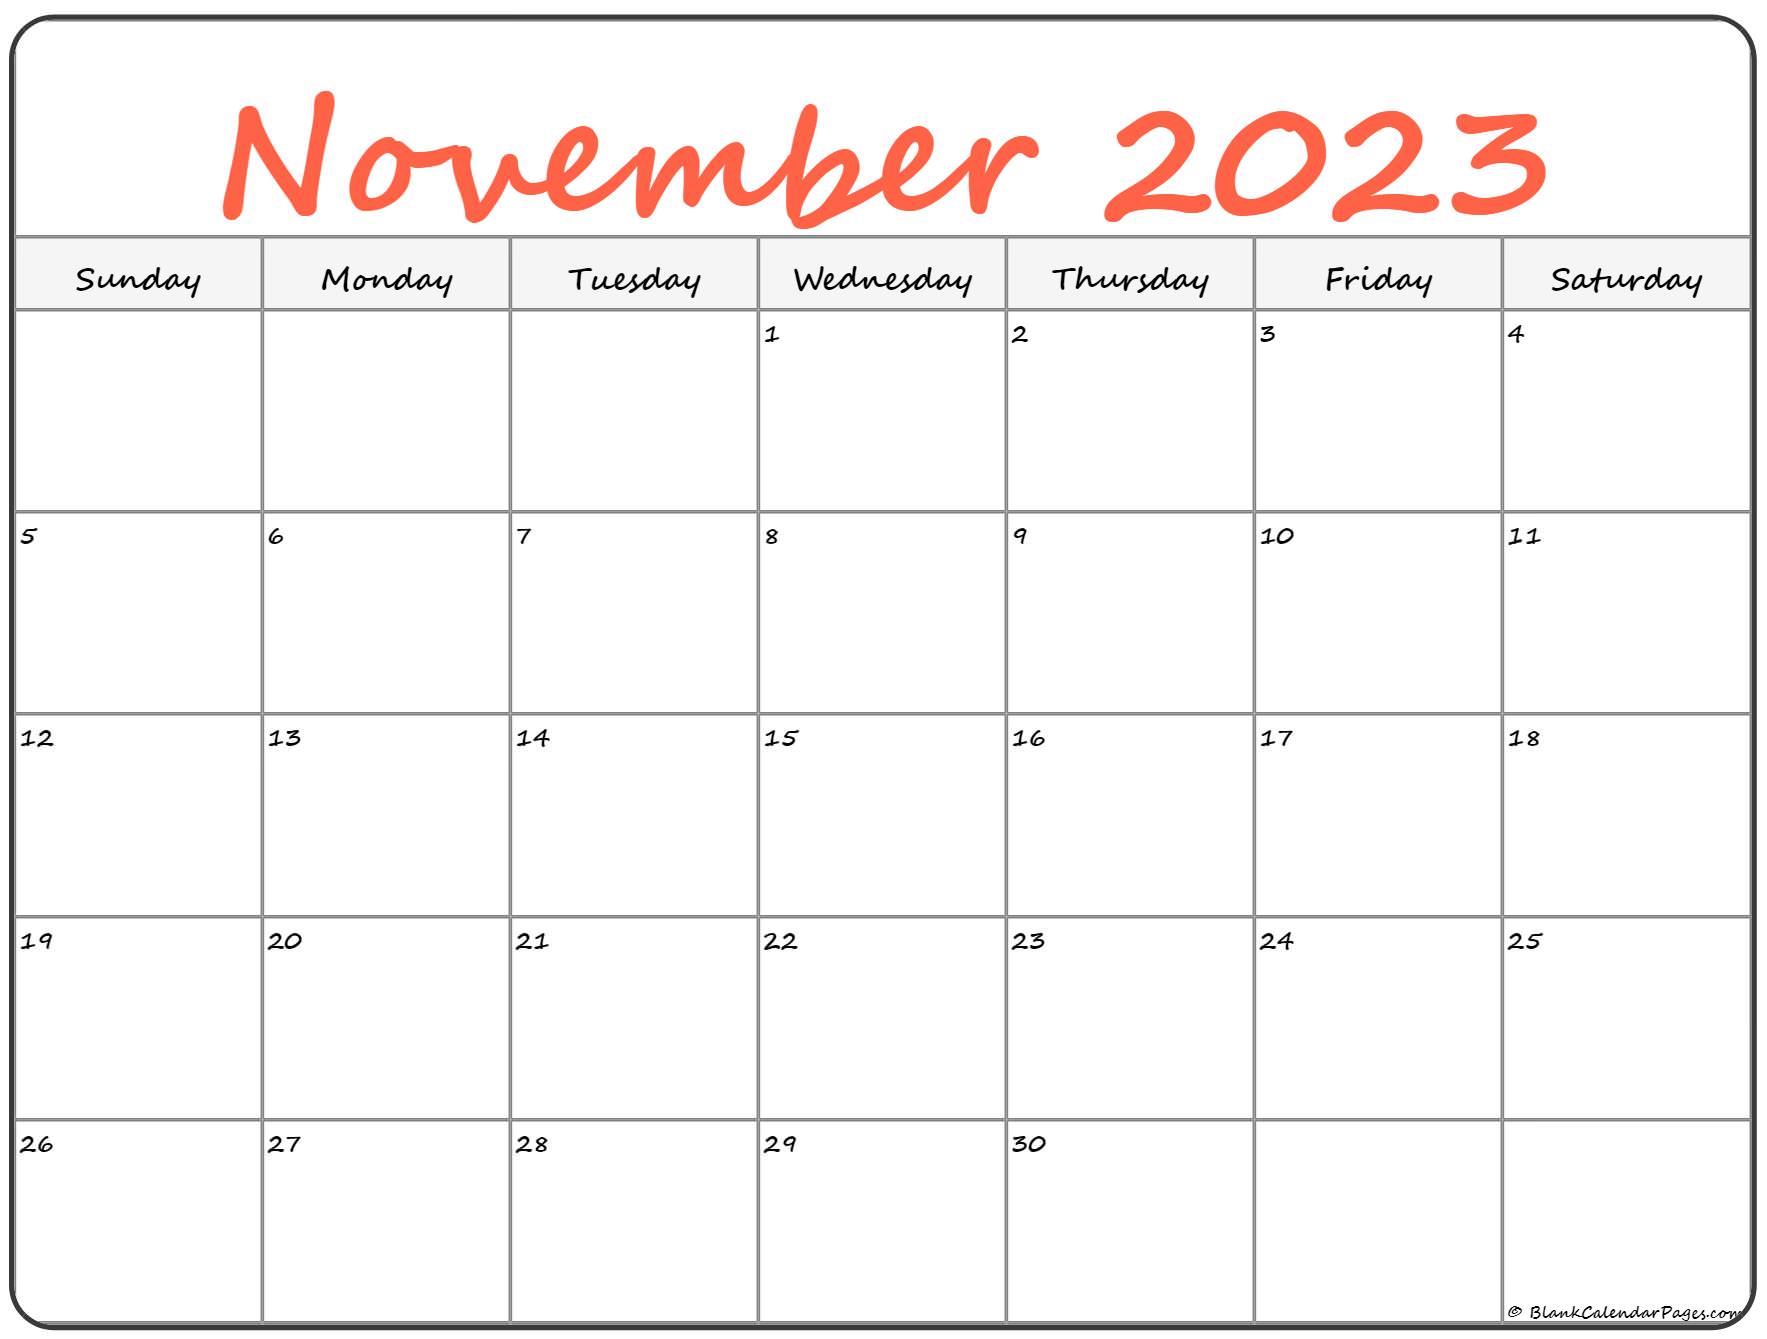 Учет март 2023. March 2022. Календарь декабрь 2022. Календарь ноябрь 2022. Календарь на март 2022 года.